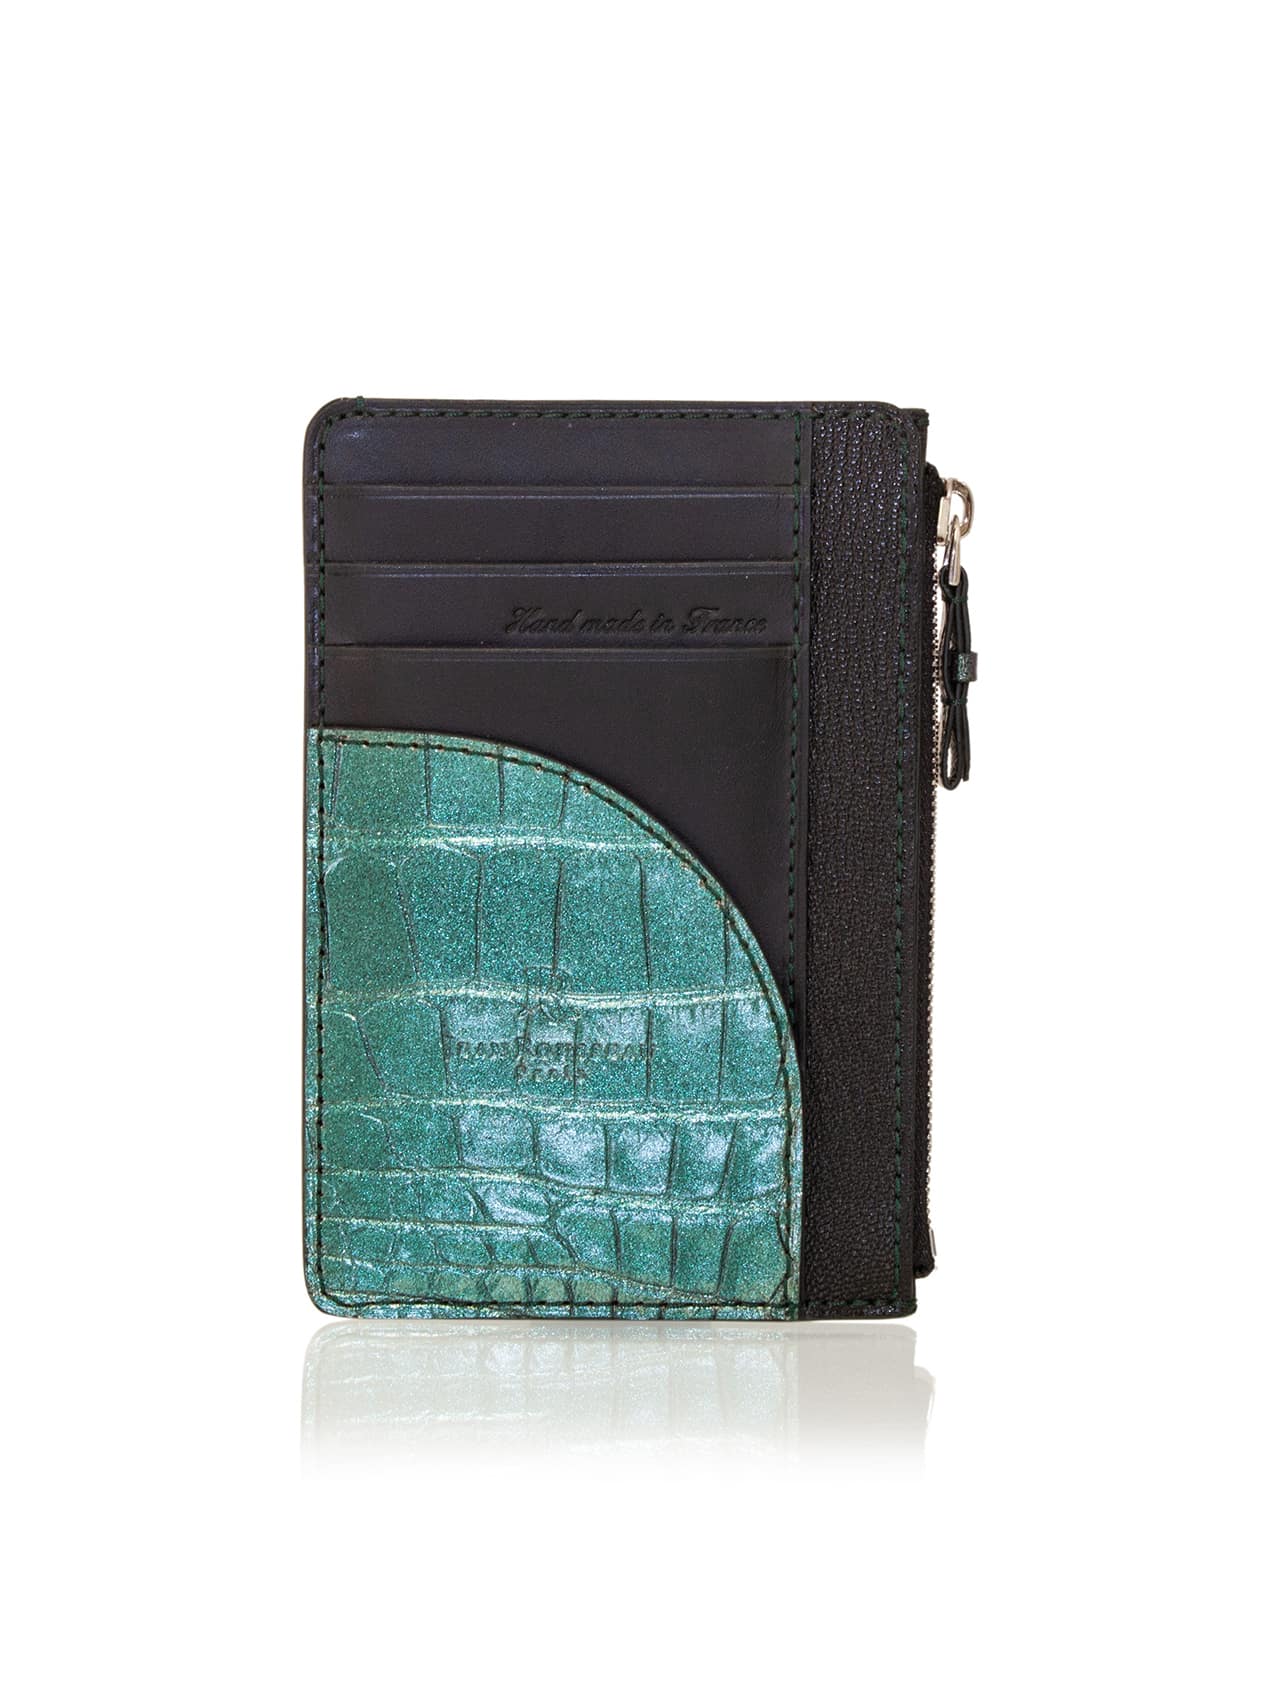 Mens Wallet, Mens Leather Wallet, Handmade Wallet Leather Wallet Thin Leather Wallet, Men Wallets, Traditional Alligator Texture Card Holder